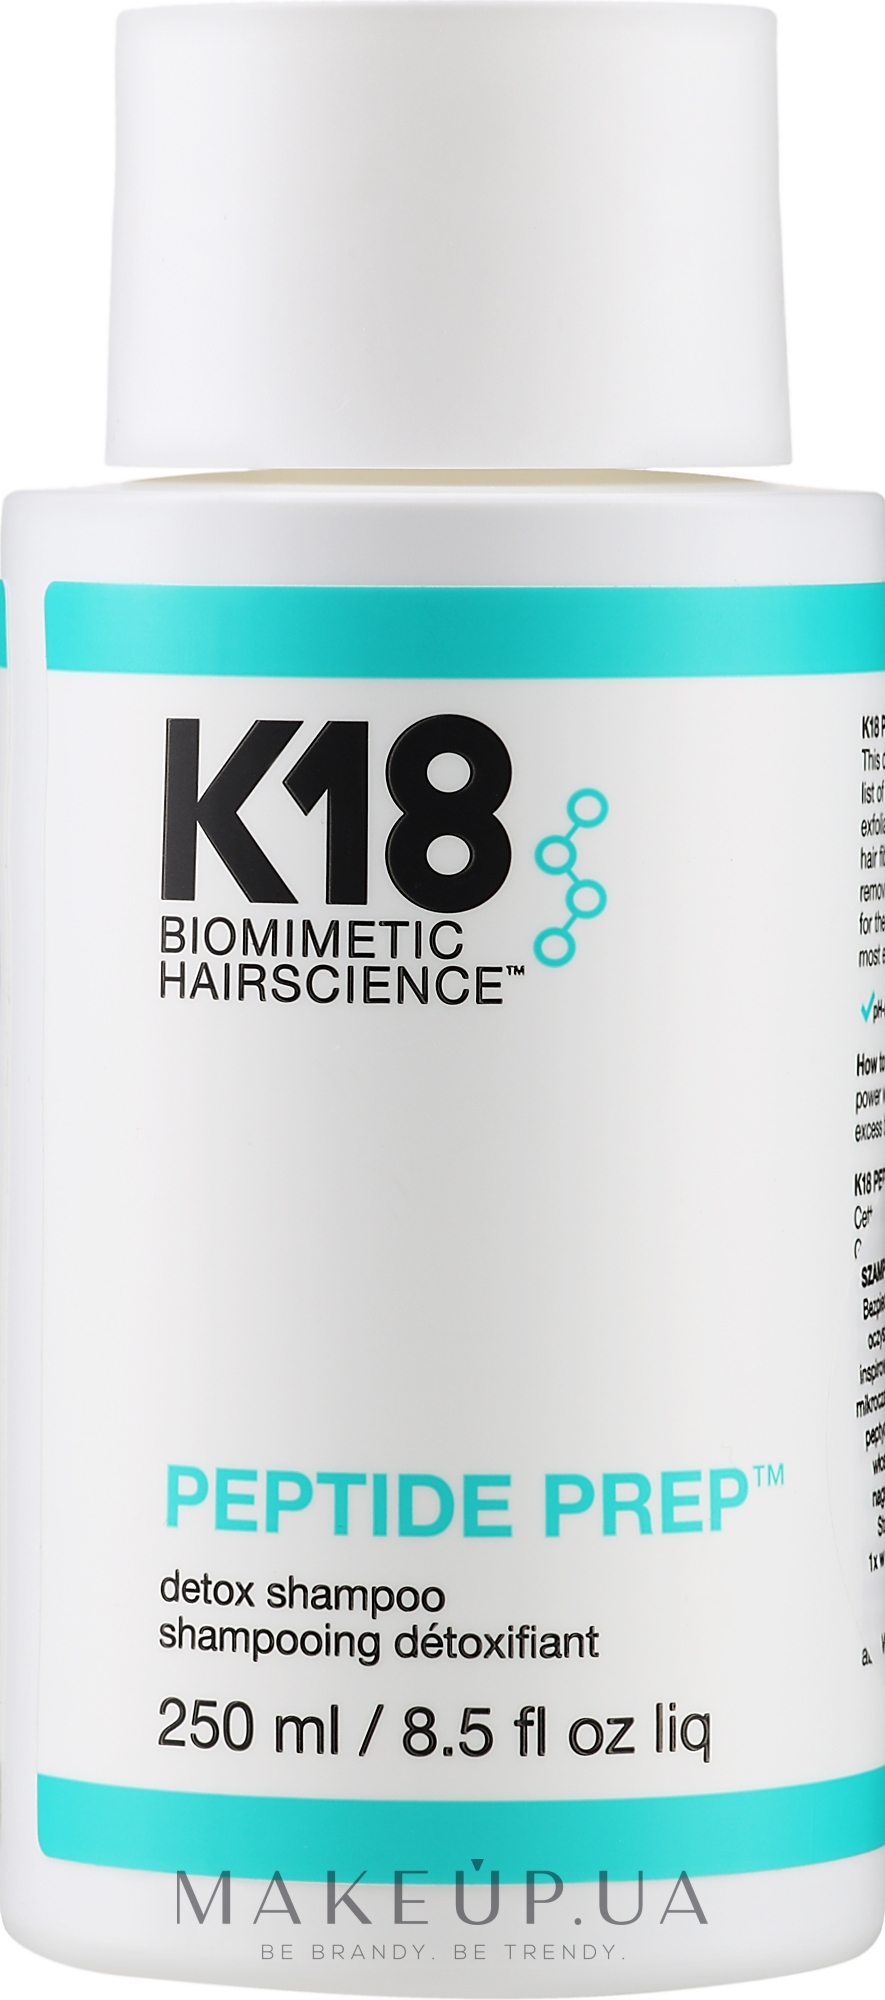 Детокс-шампунь для волос - K18 Hair Biomimetic Hairscience Peptide Prep Detox Shampoo — фото 250ml